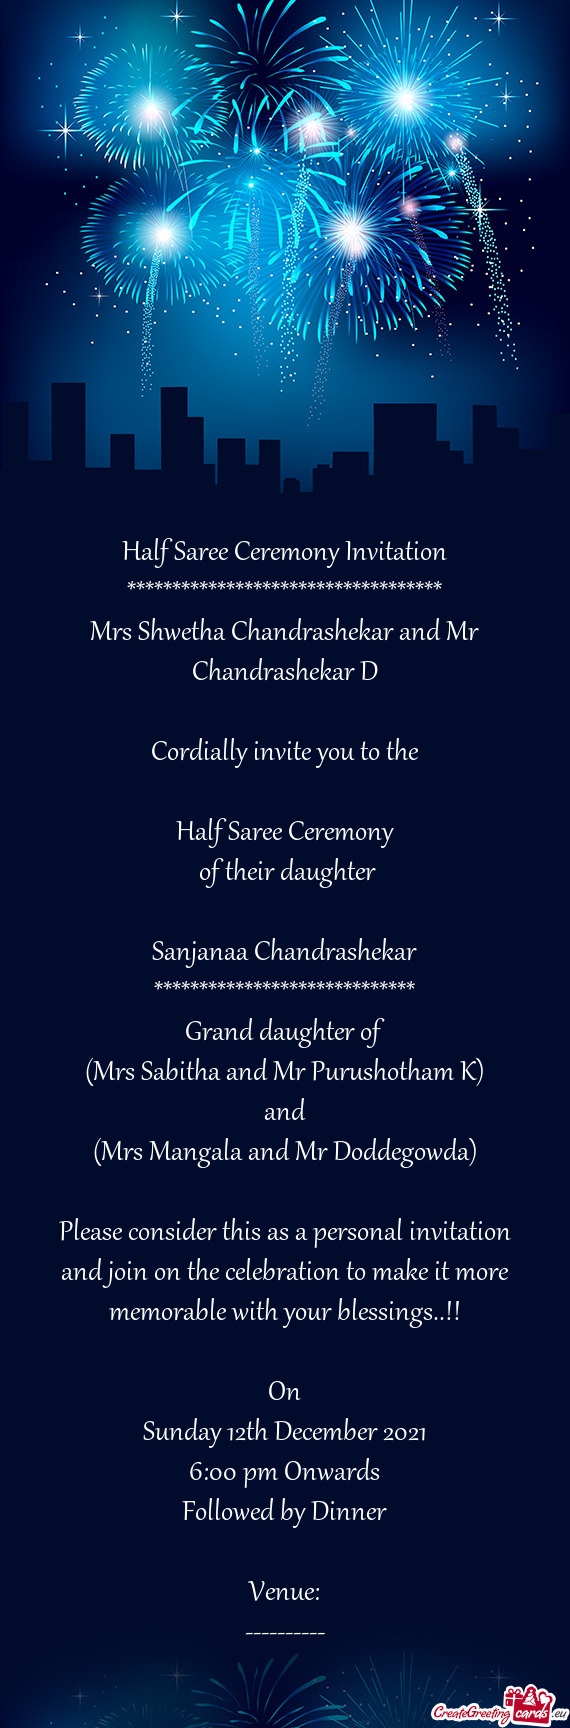 Mrs Shwetha Chandrashekar and Mr Chandrashekar D